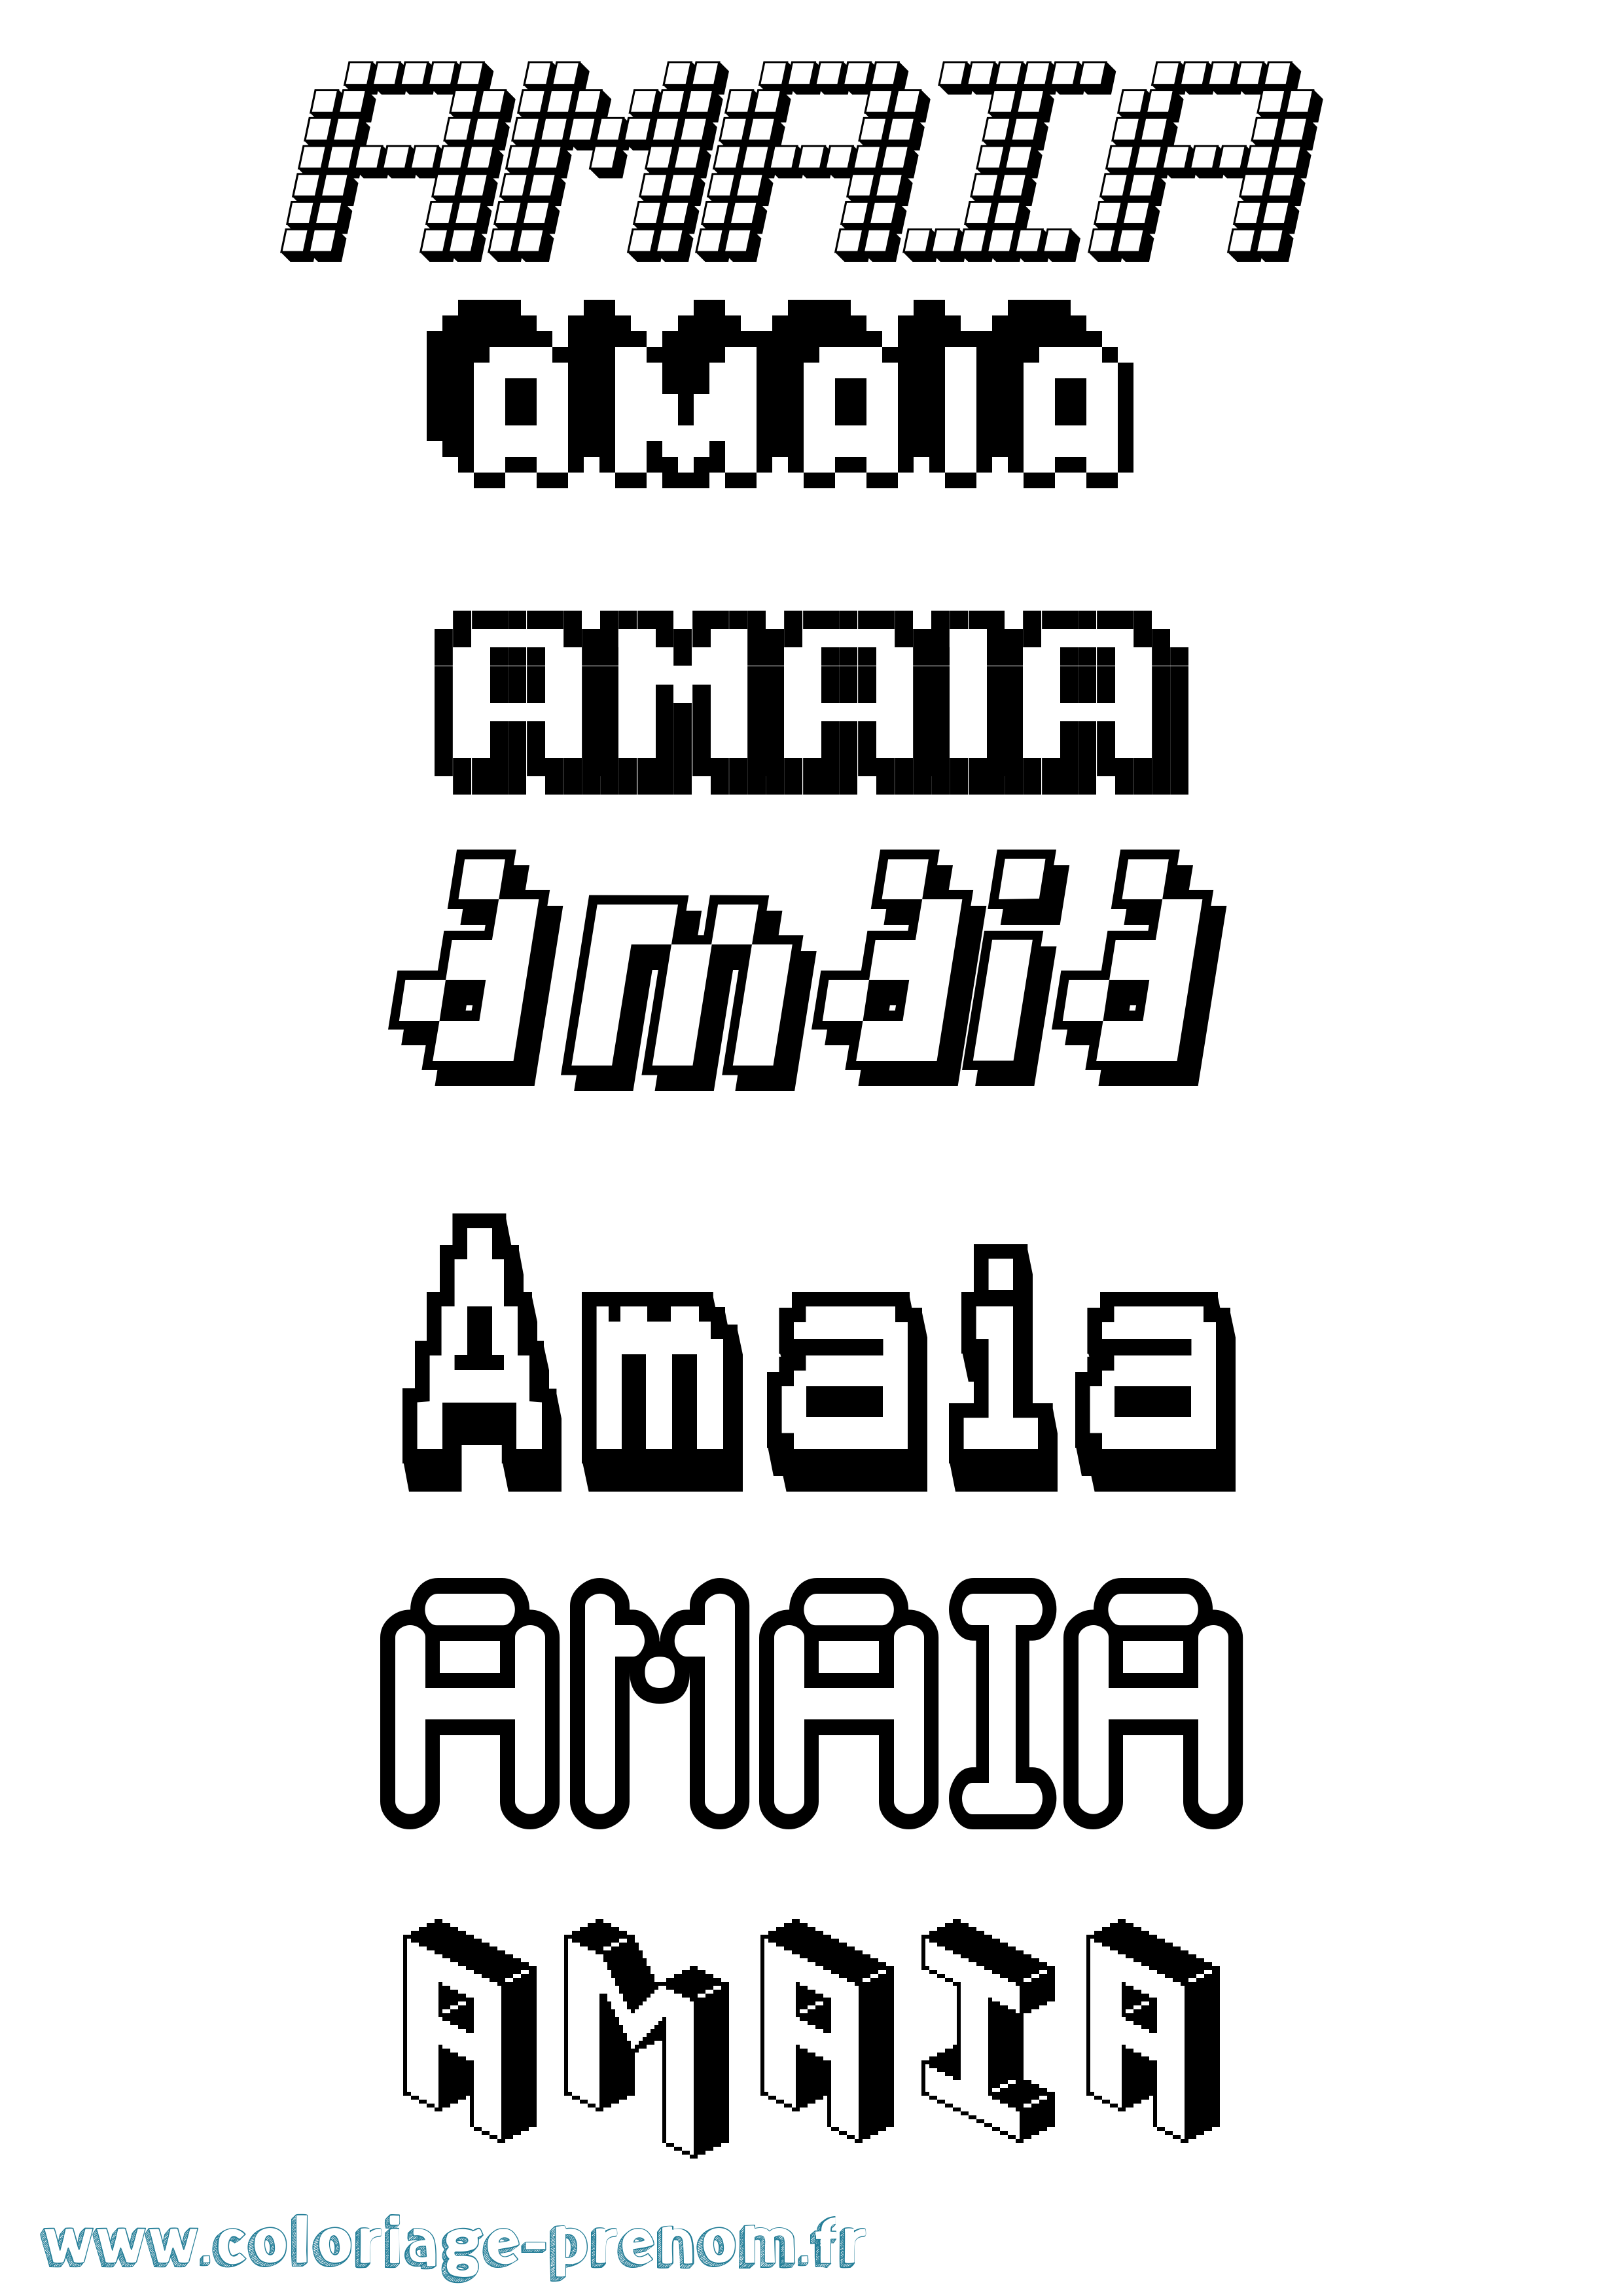 Coloriage prénom Amaia Pixel